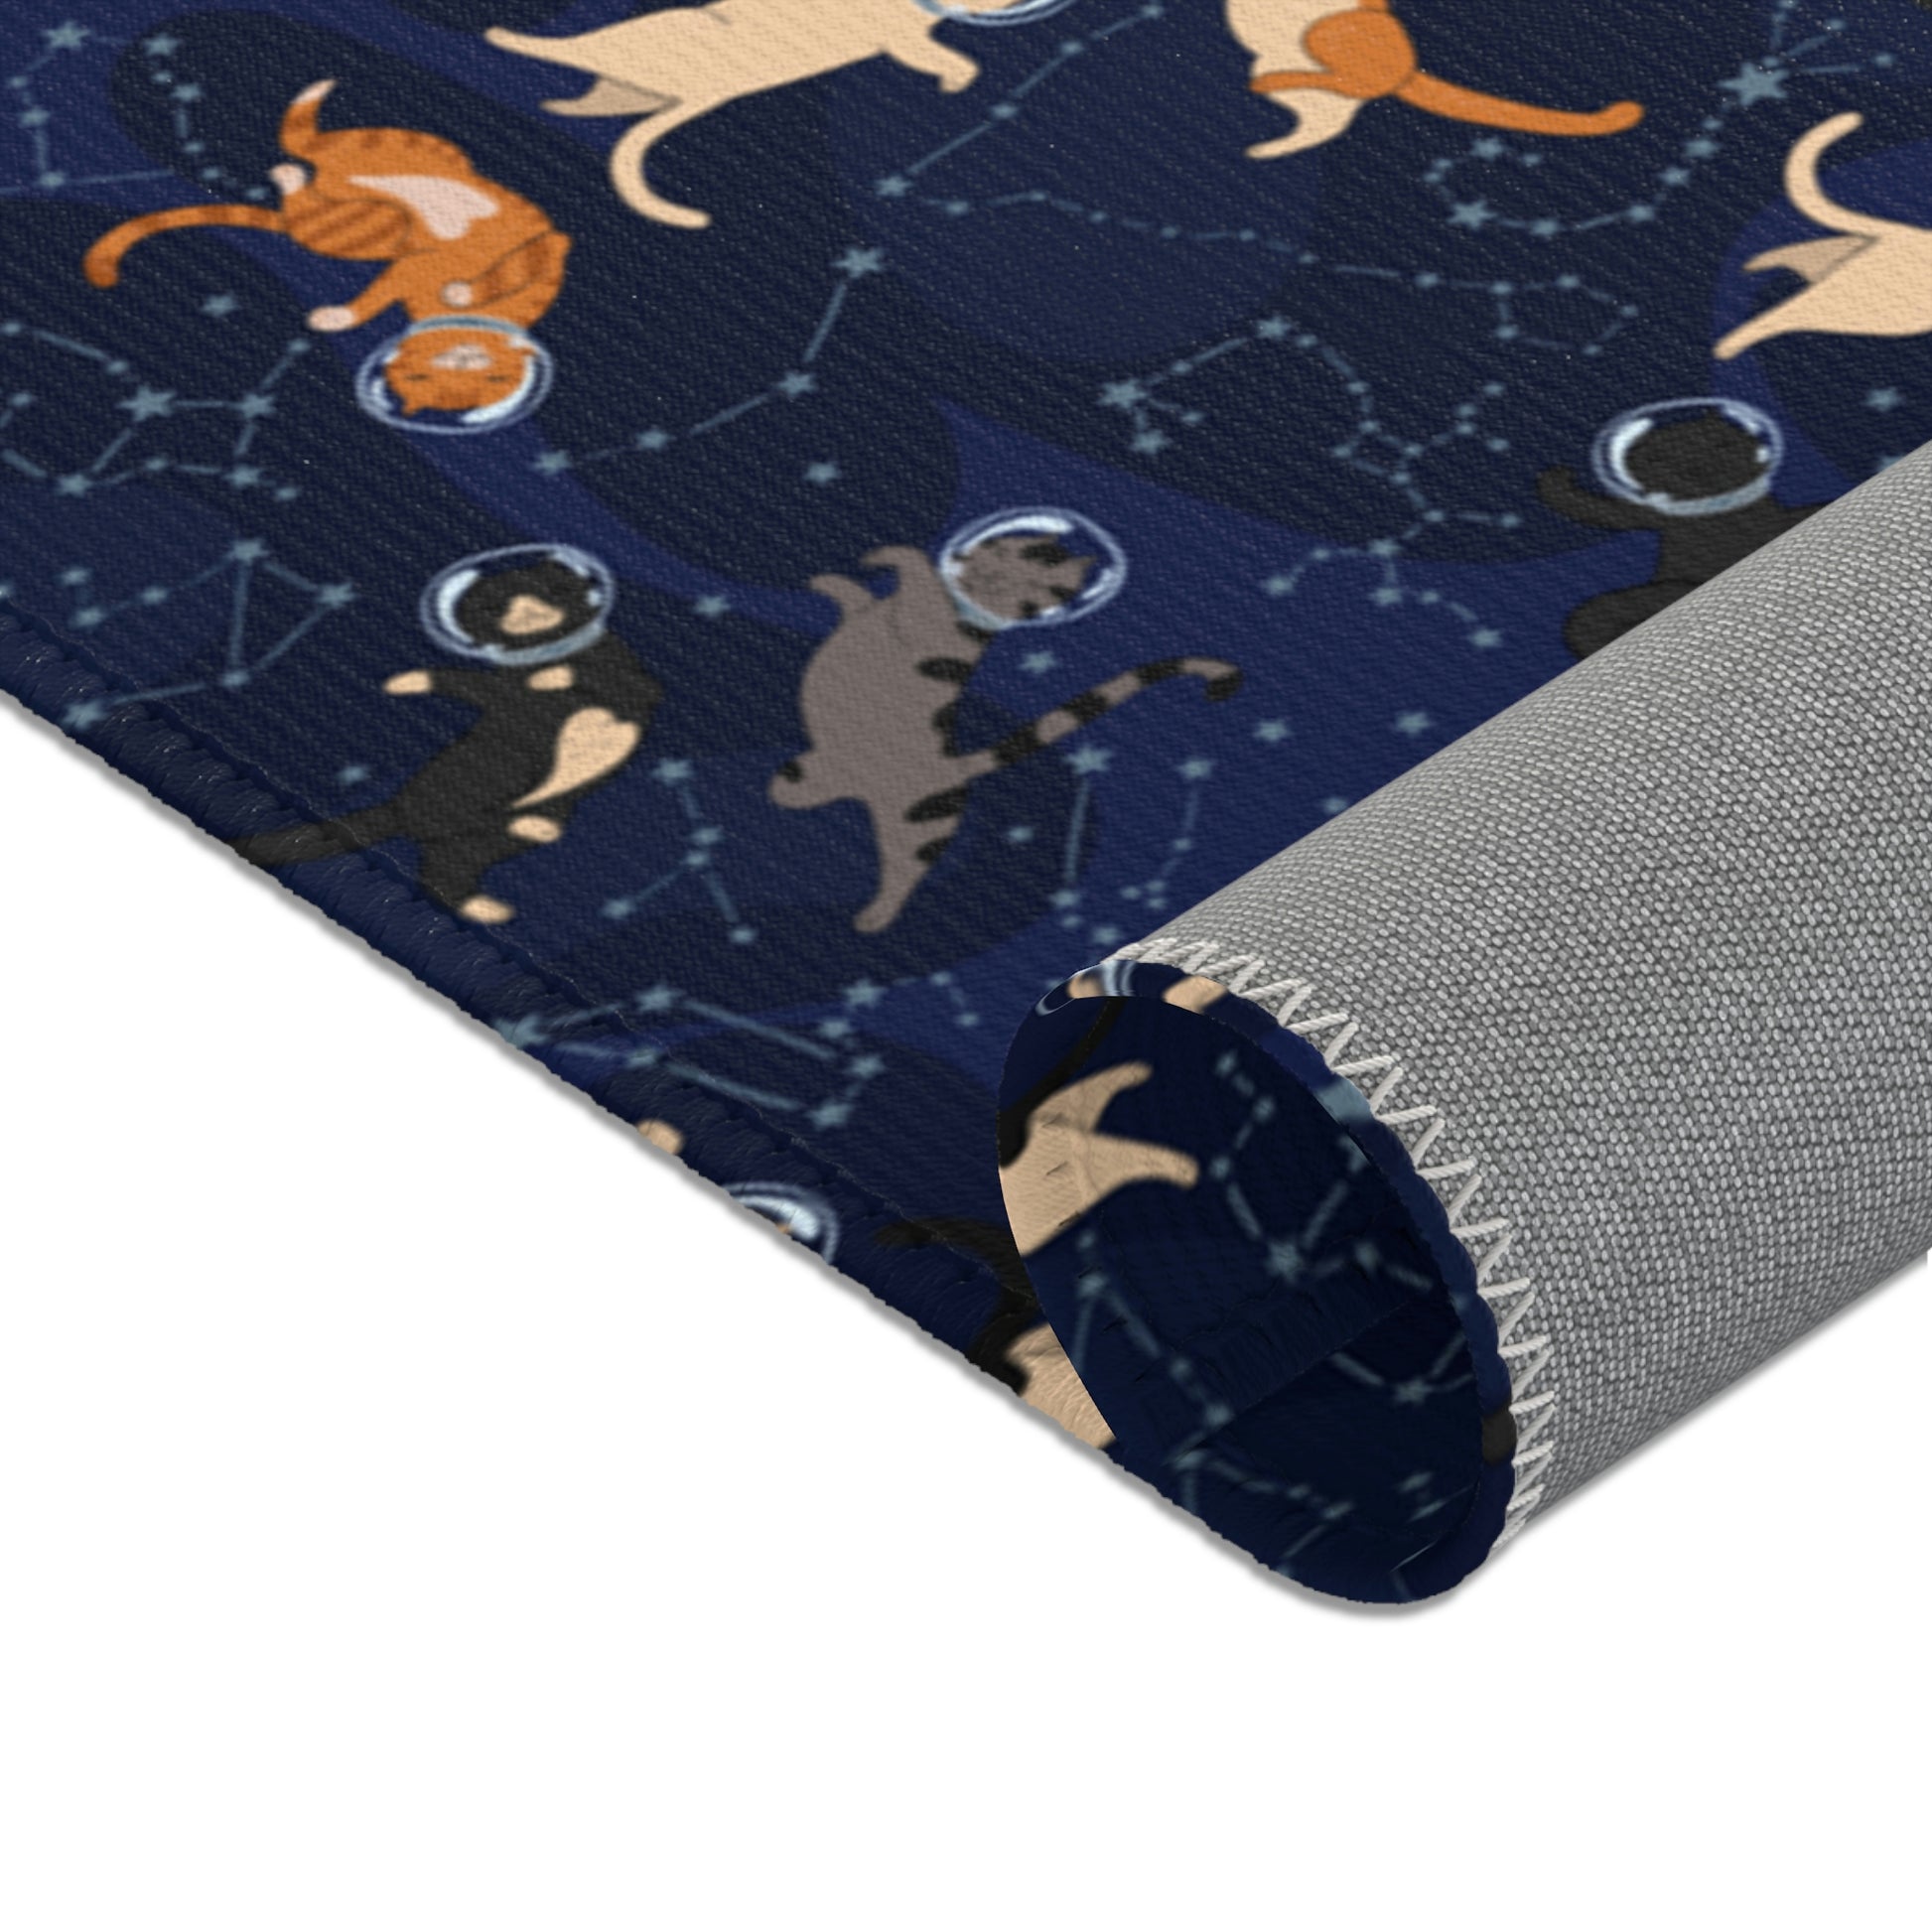 Galaxy Cats in Space Area Rug Carpet, Constellation Home Floor Decor 2x3 4x6 3x5 Designer Kids Nursery Room Decorative Bedroom Mat Starcove Fashion